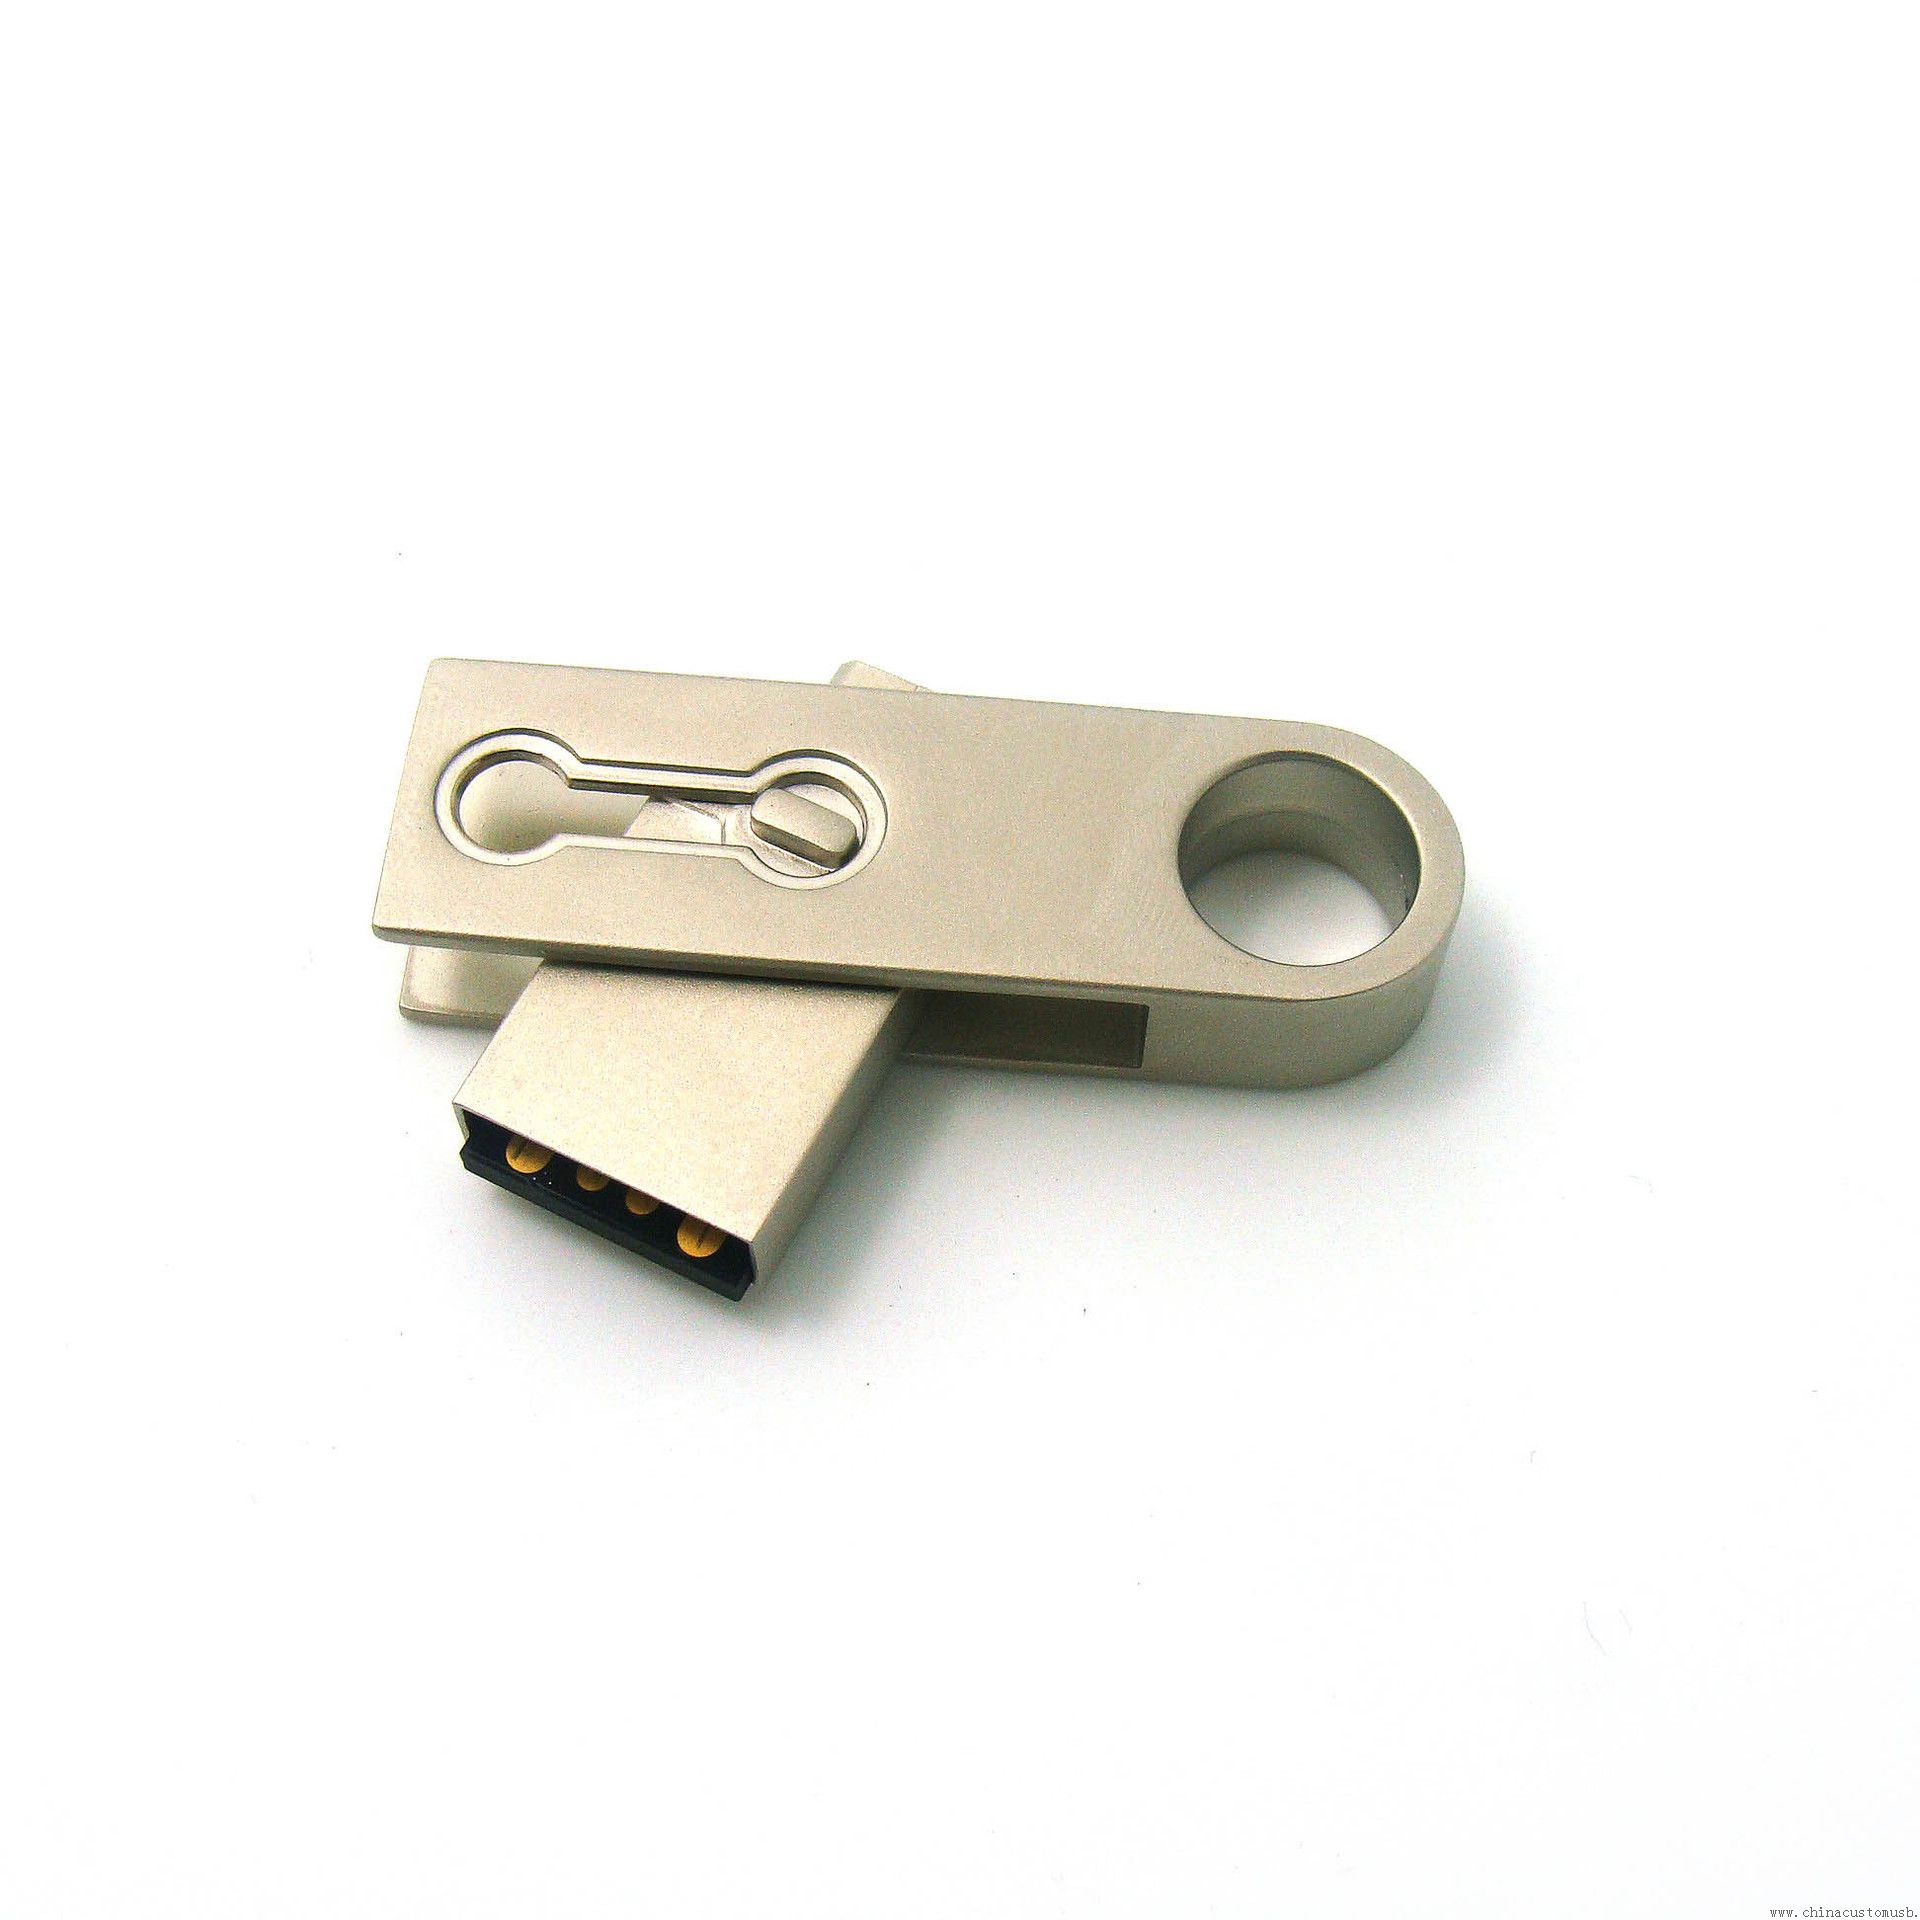 Metal OTG USB Flash Disk with hook